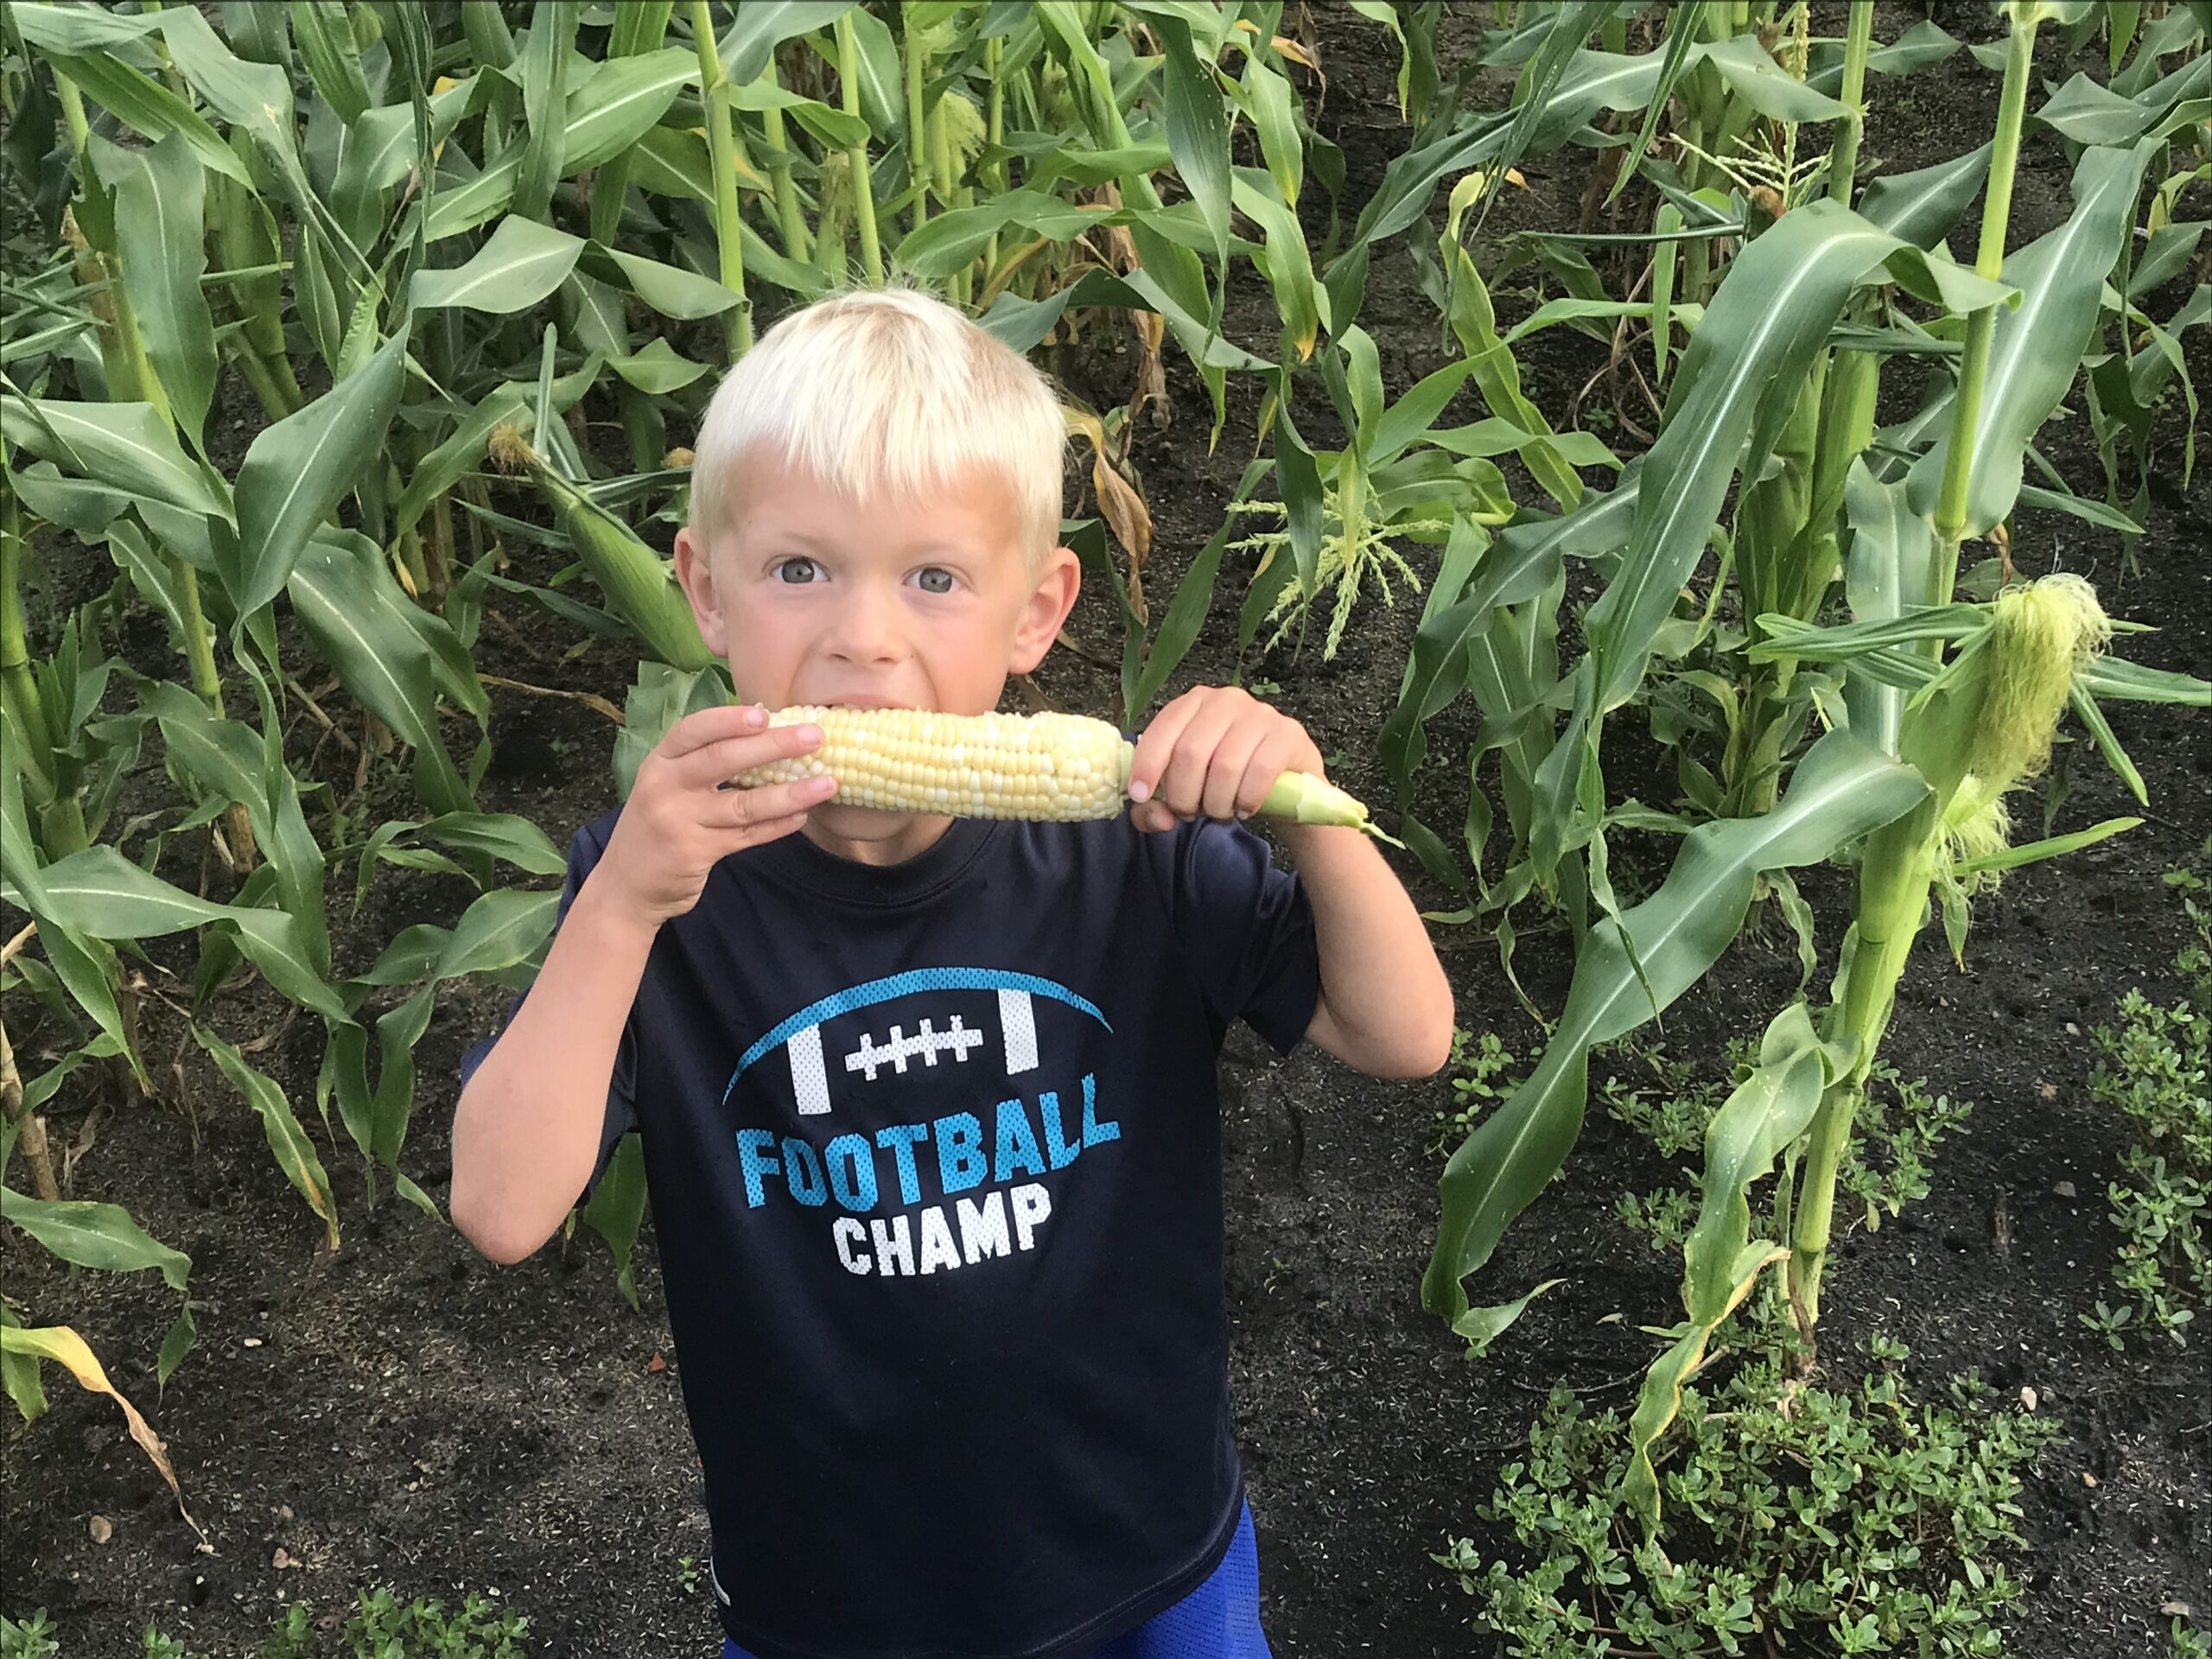 grandson eating fresh corn - image